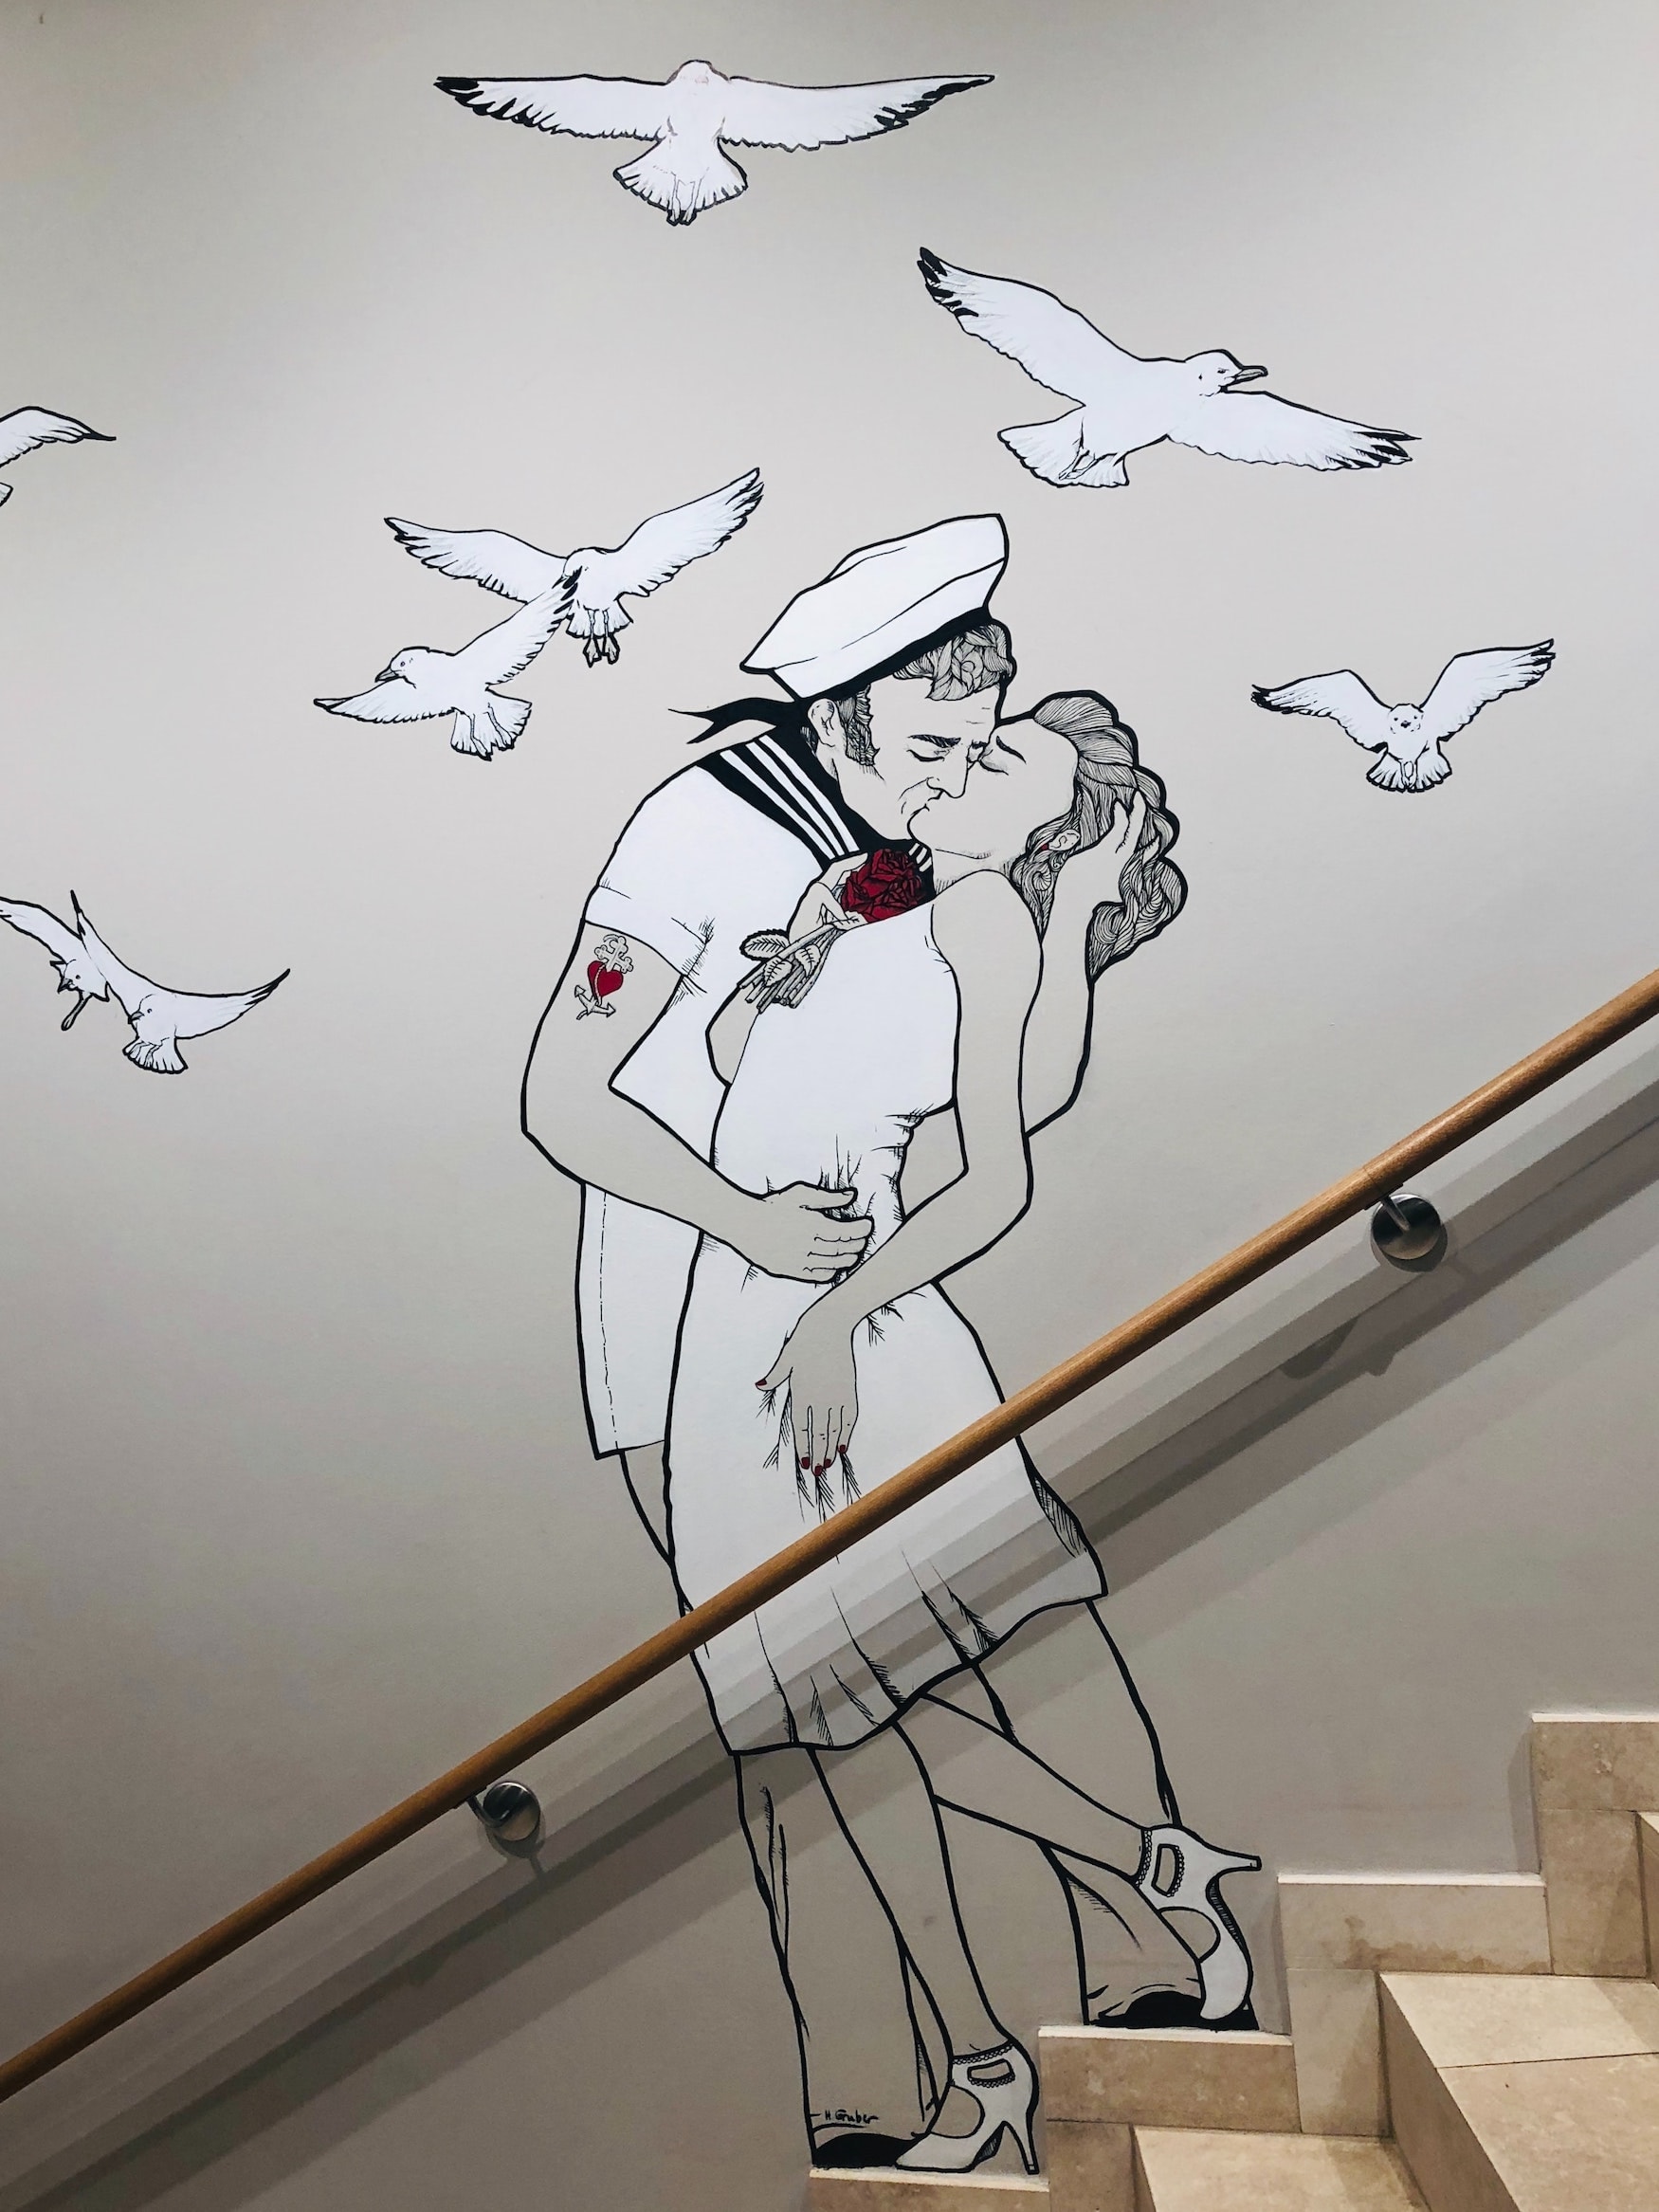 Graffiti in einem Hotel in Hamburg: Matrose küsst Frau